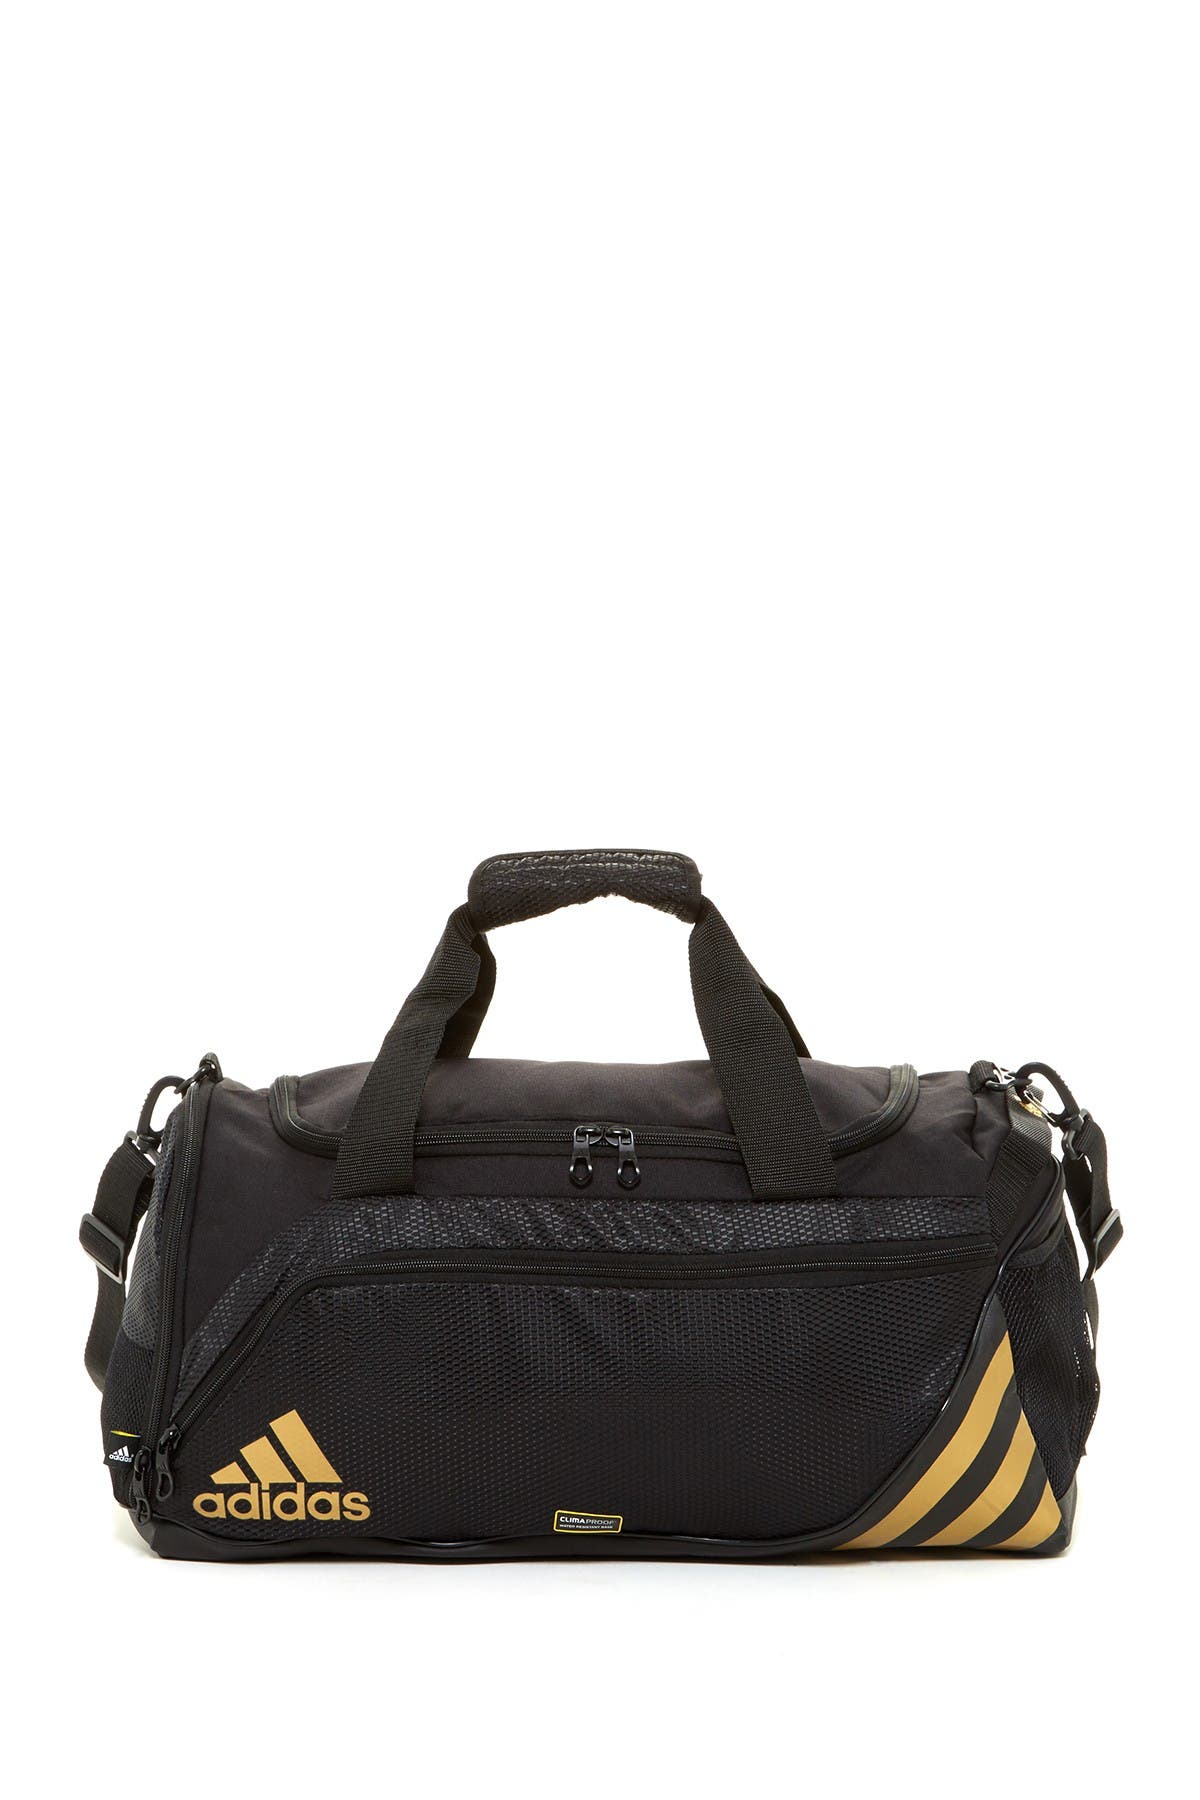 adidas team speed small duffel bag